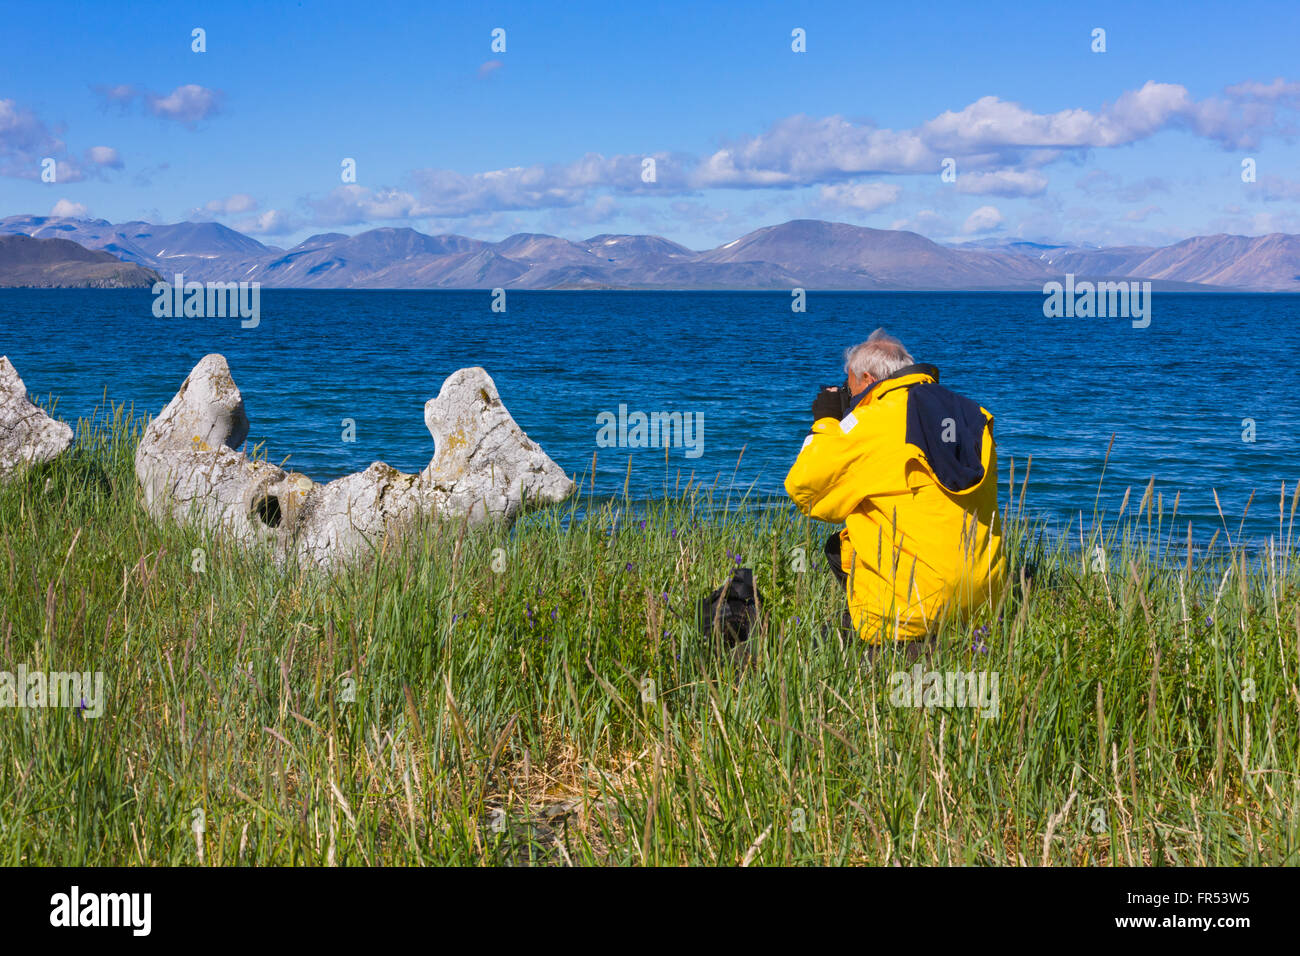 Touristen fotografieren Grönlandwal Kieferknochen, Yttygran Insel, Beringmeer, russischen Fernen Osten Stockfoto